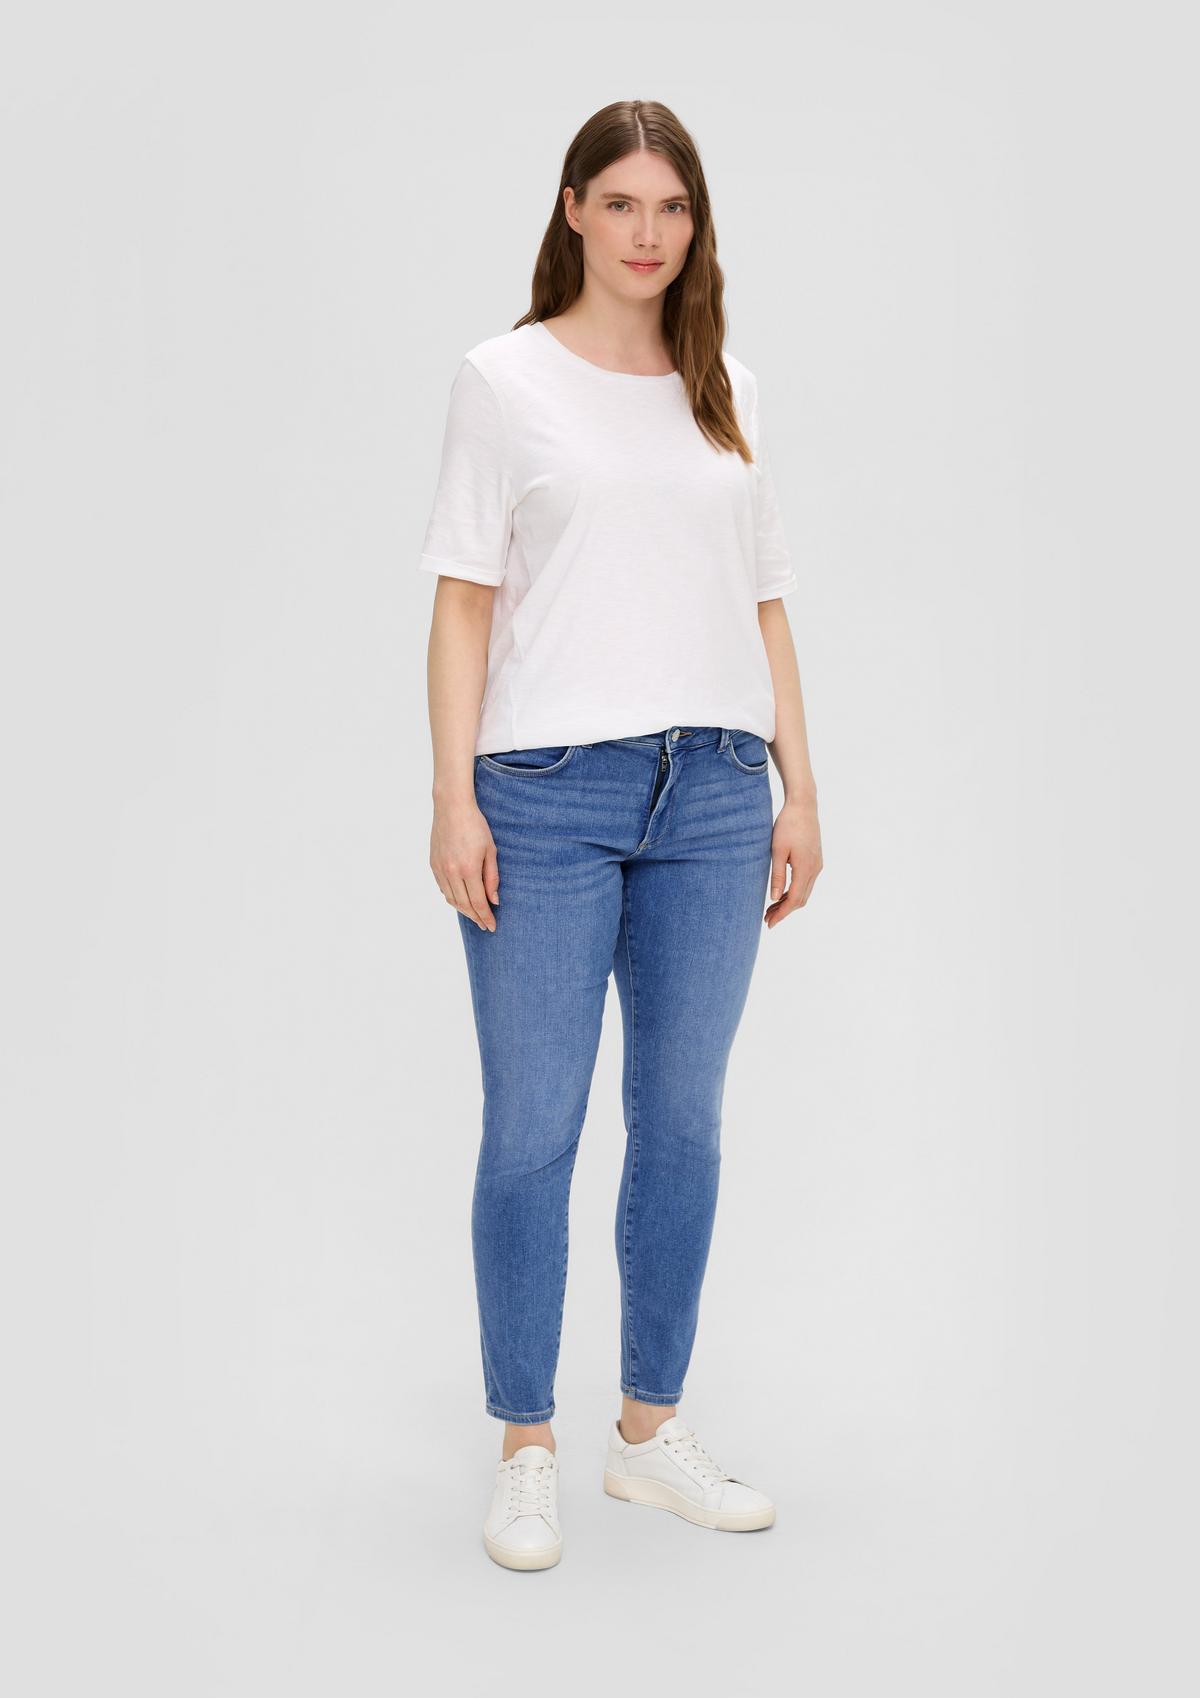 Jeans hlače Anny / kroj Mid Rise / ozke hlačnice